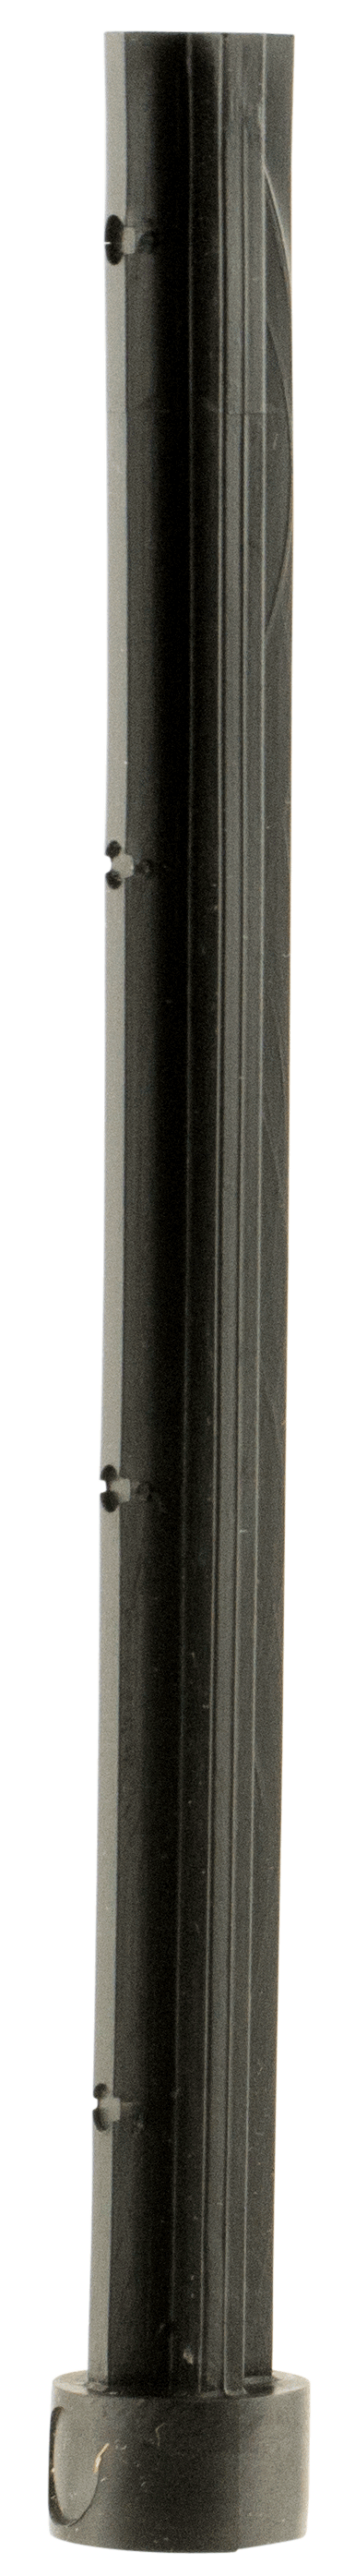 Primos 69403 JellyHead Maximum Rem Choke 20 Gauge Turkey Steel Black-T Coating